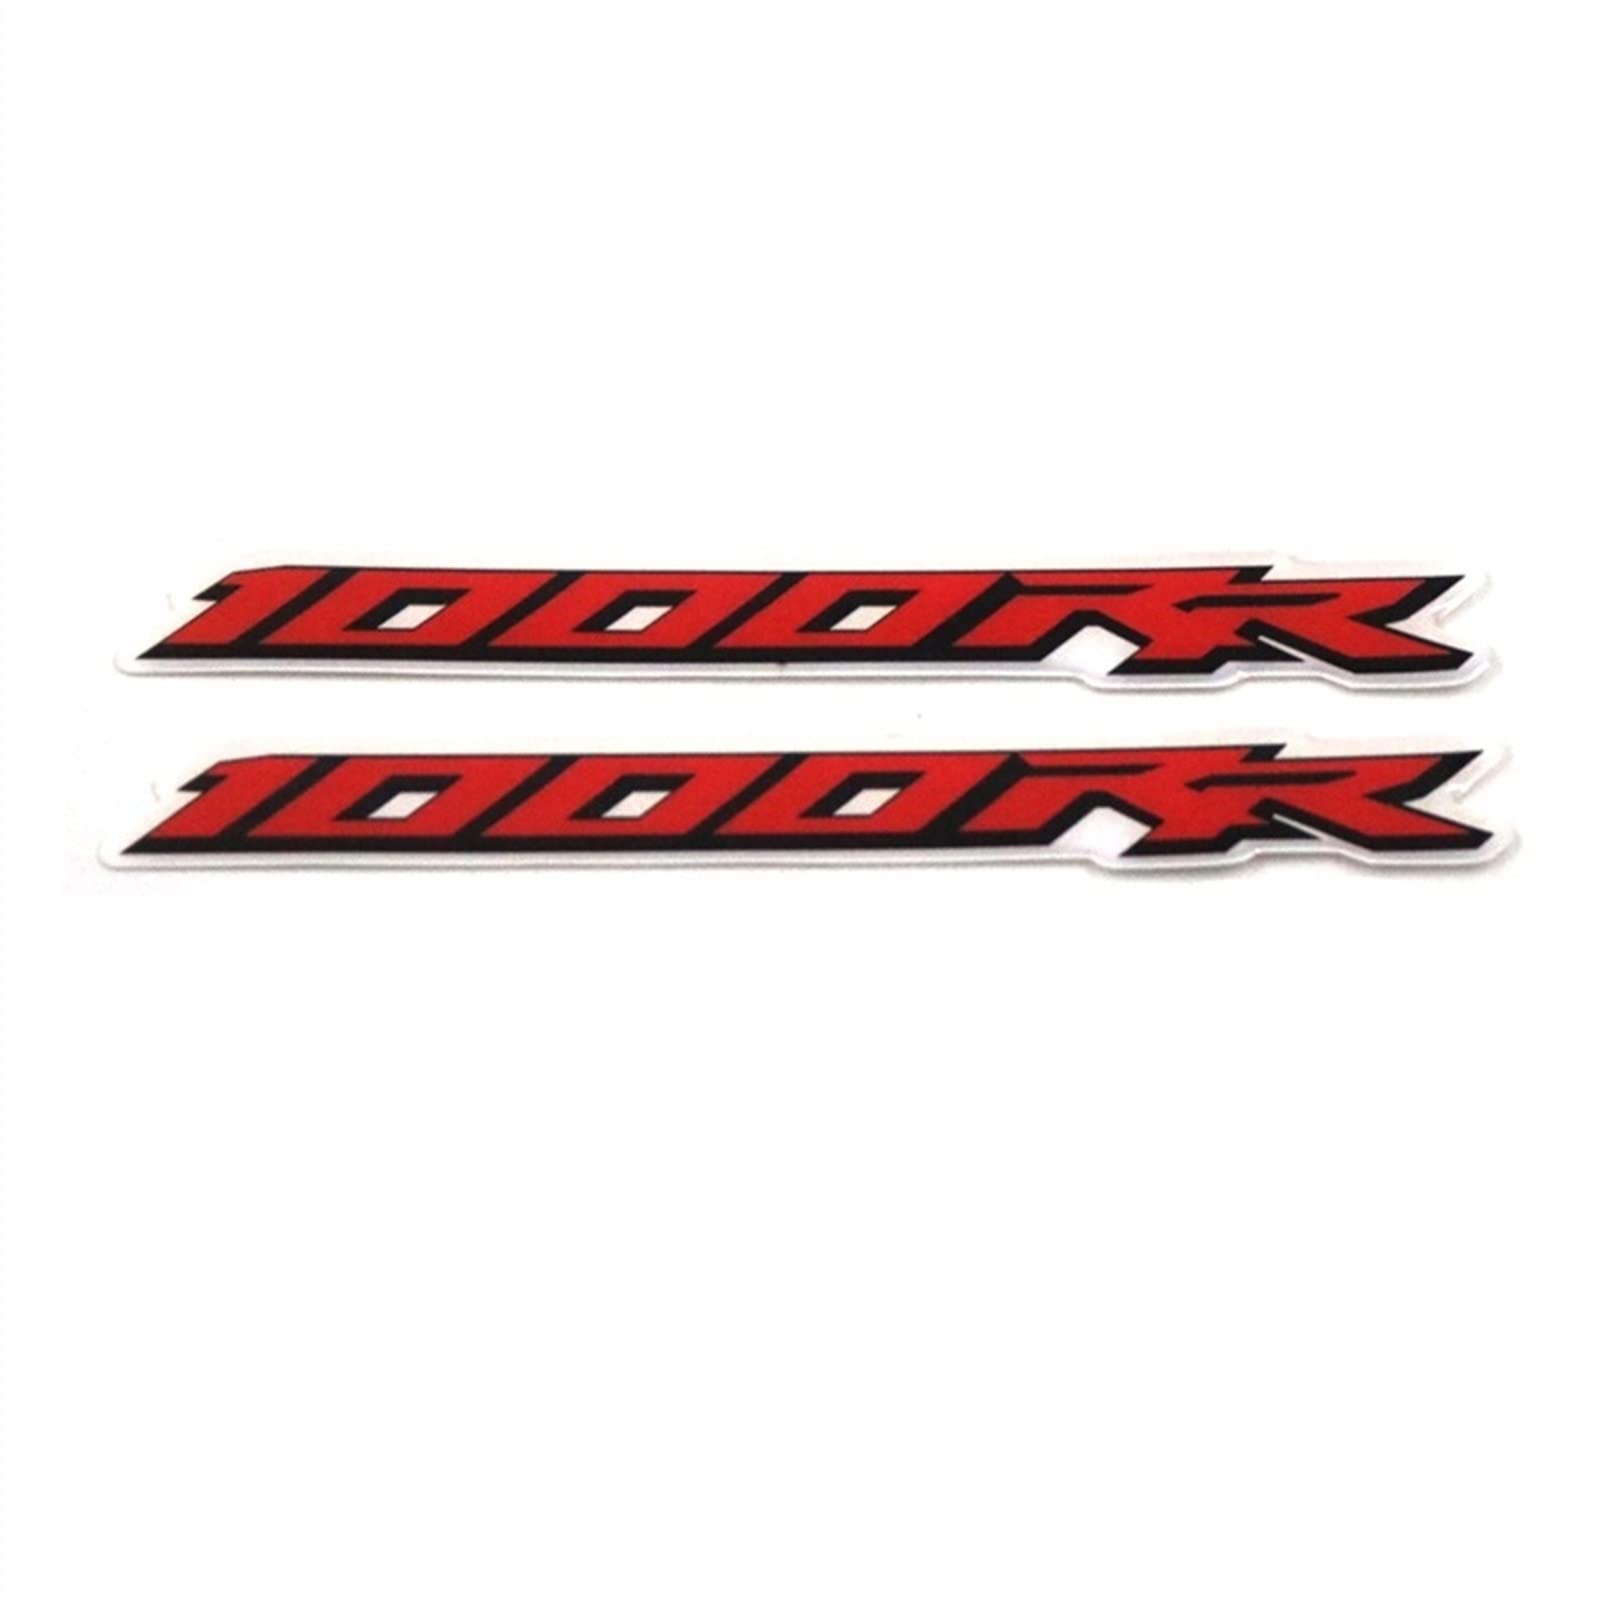 POLOUK Motorrad Raise Logo Aufkleber Für Hond-a CBR1000RR CBR 1000 RR Motorrad Abzeichen Emblem Aufkleber Racing Verkleidung Tank Pad Grip (Color : C-1) von POLOUK